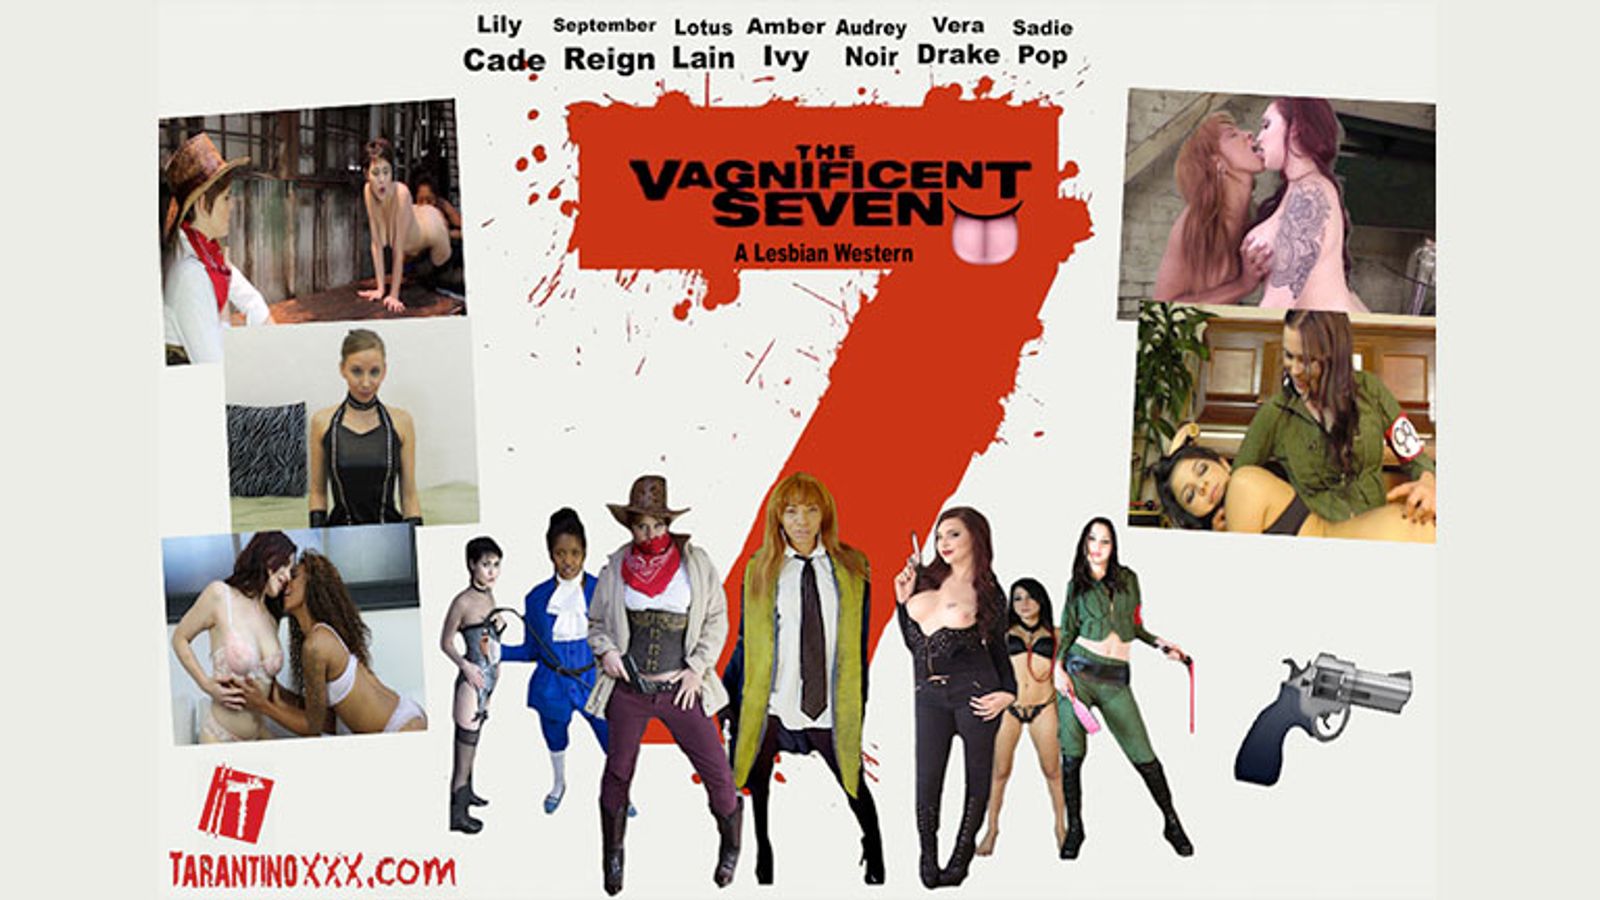 Tarantino XXX Releases Lesbian Western 'The Vagnificent Seven'